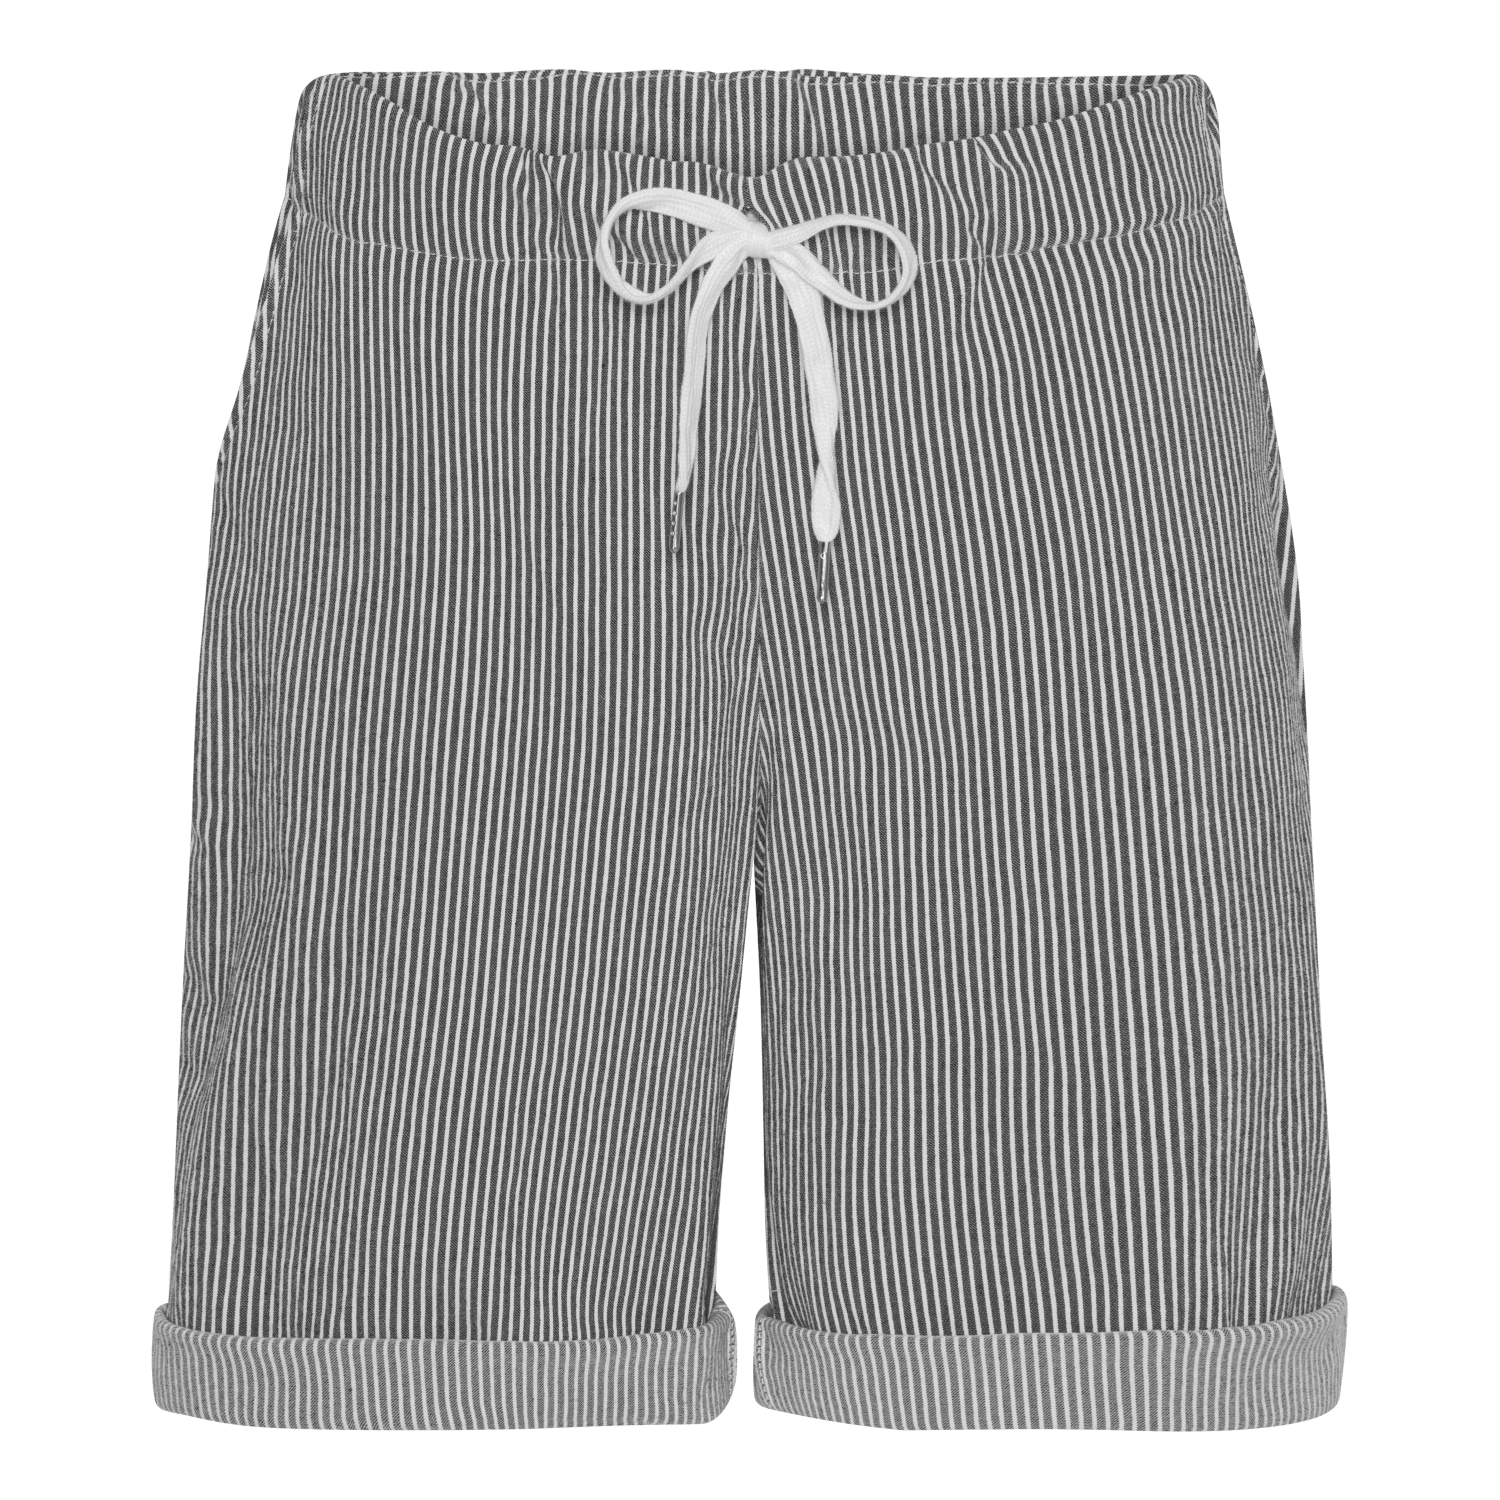 Pinstripe Shorts - Black/White - Amaze Cph - Black/White - S